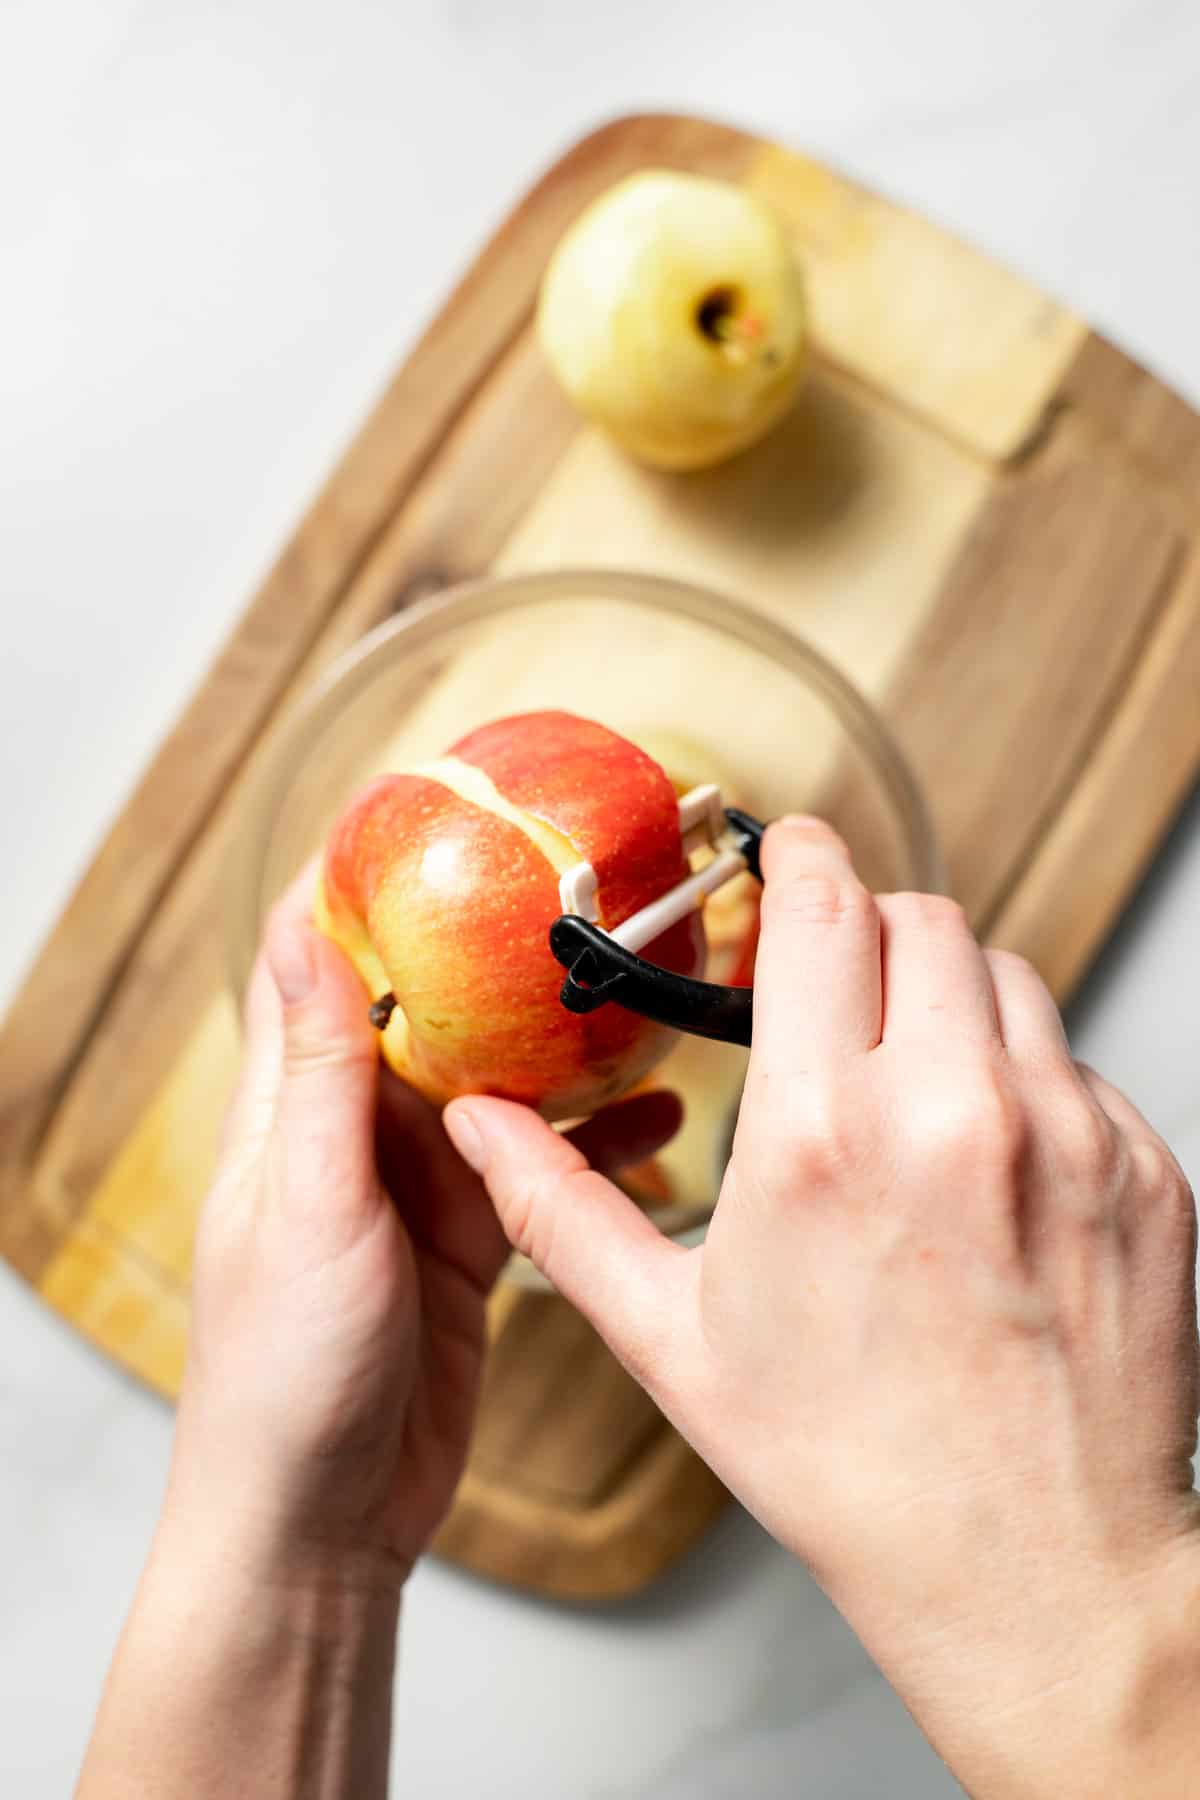 peeling an apple with peeler